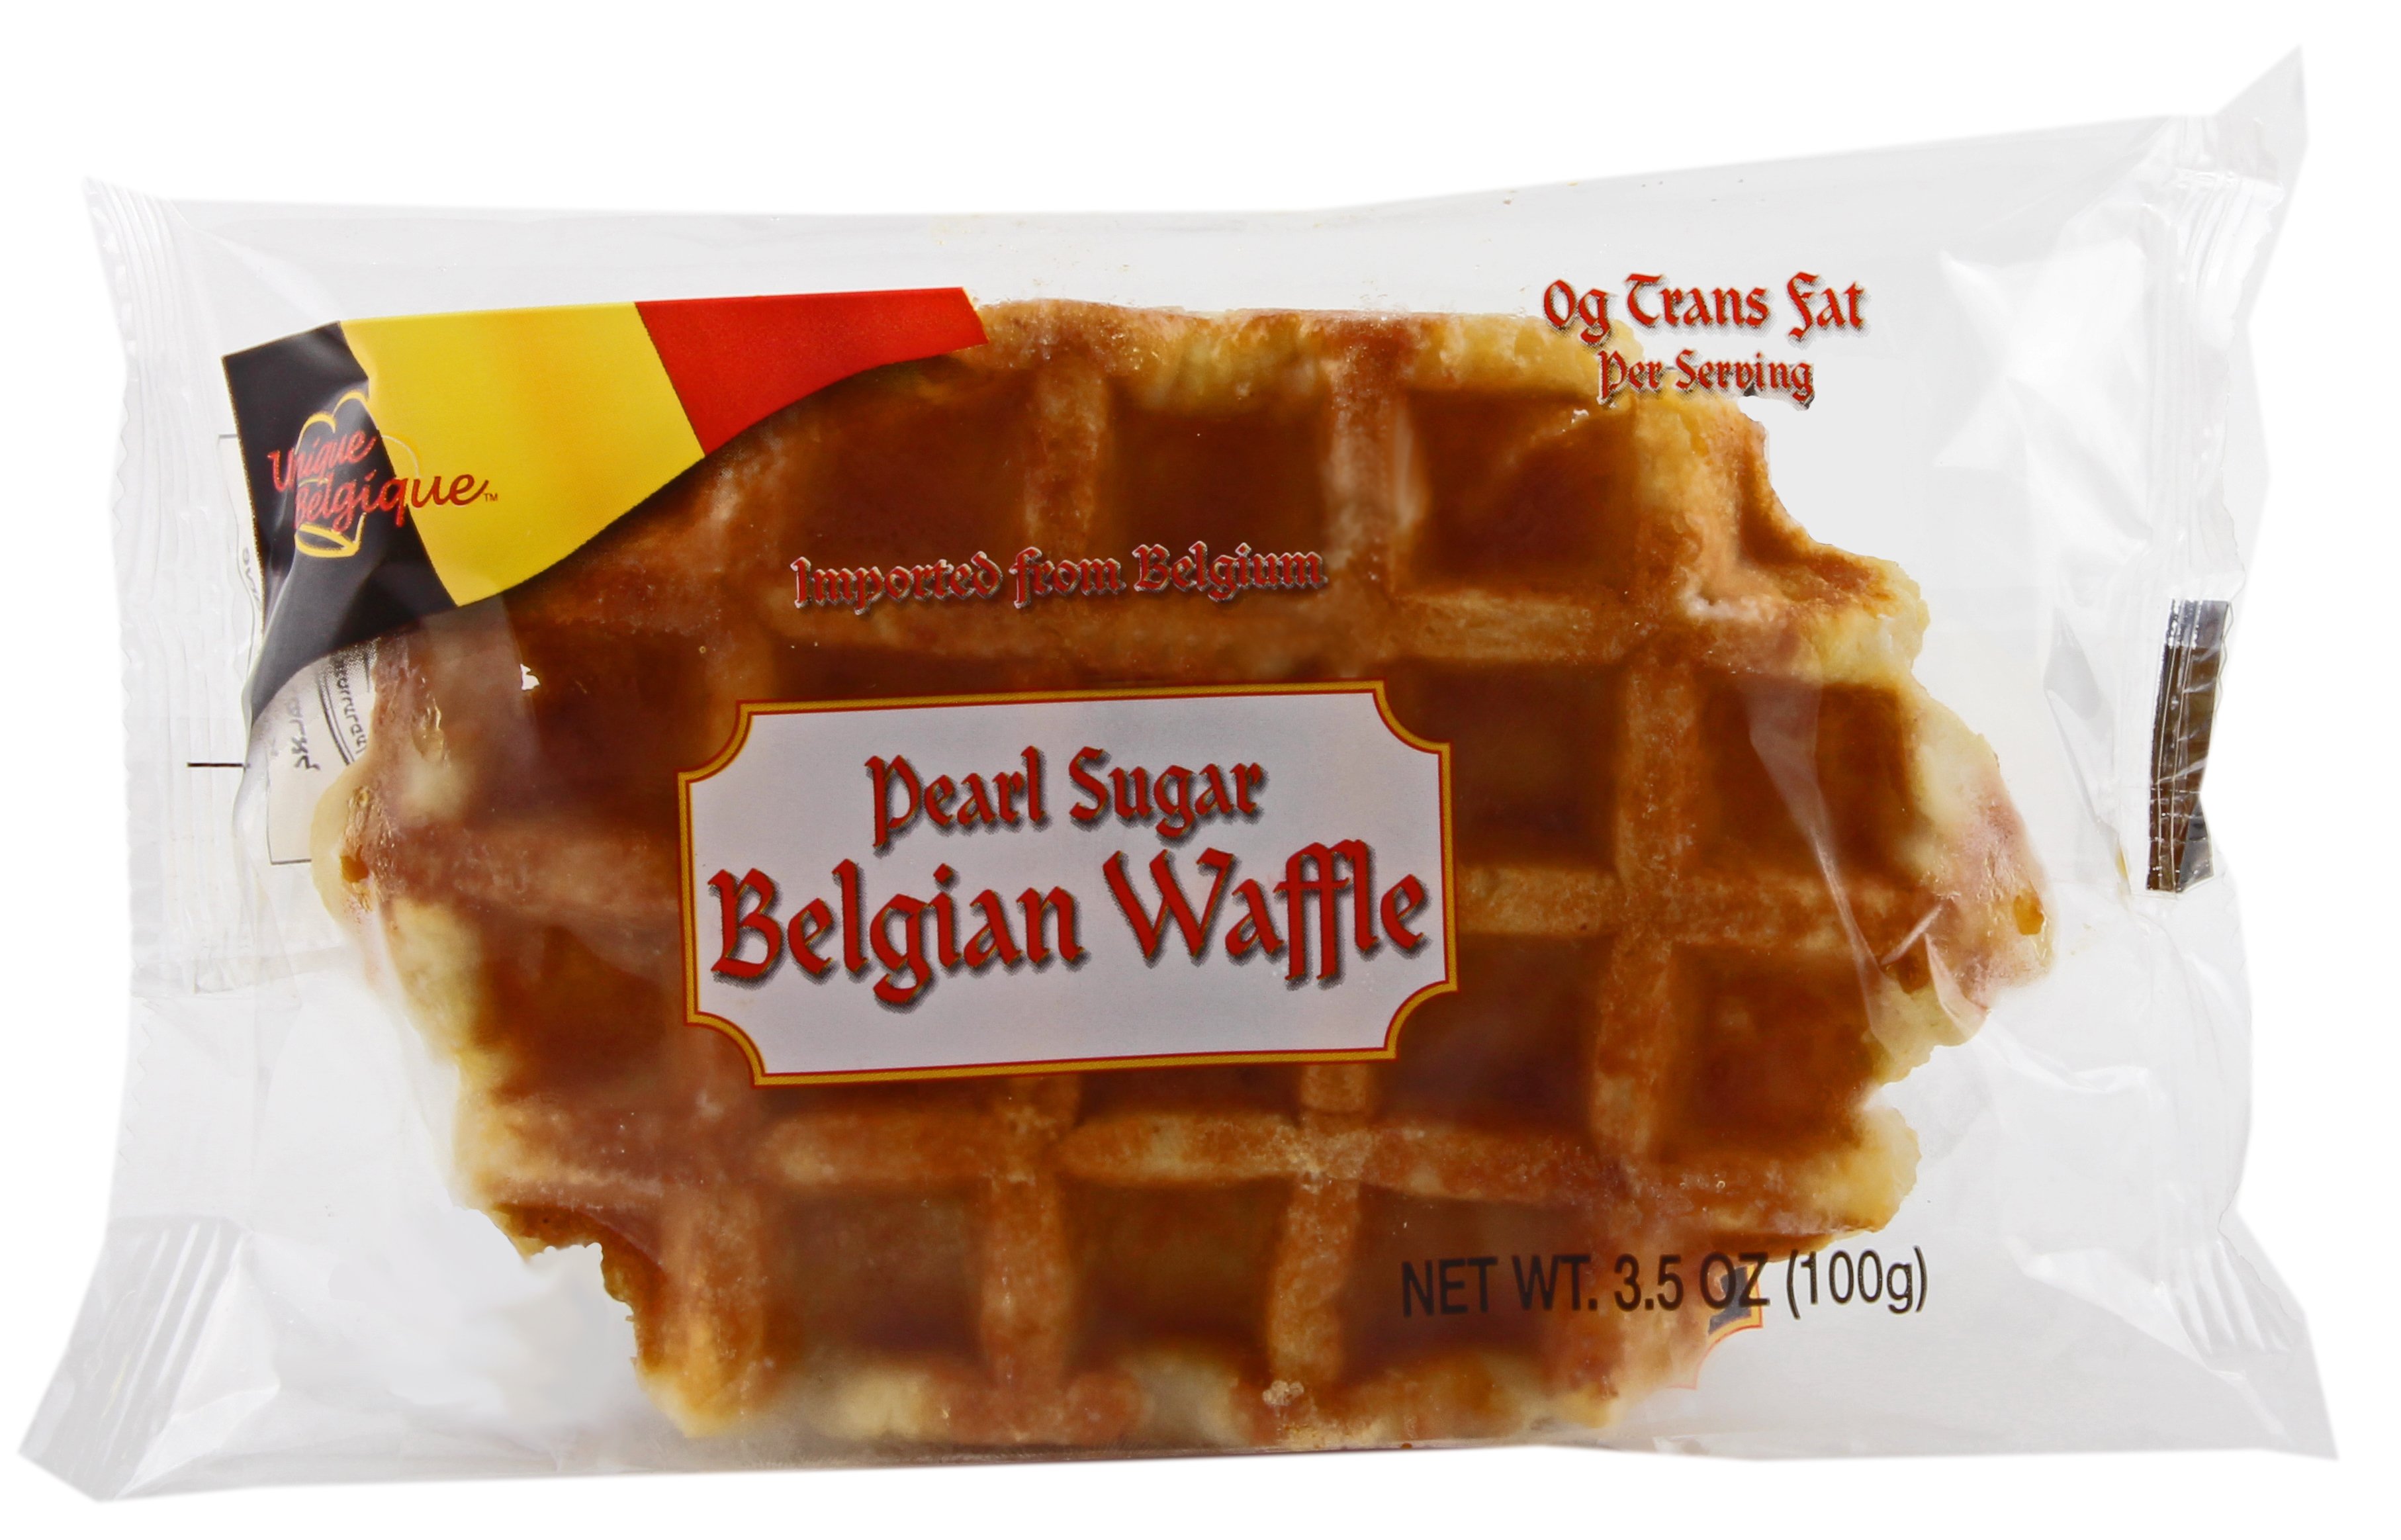 Unique Belgique Pearl Sugar Belgian Waffle Shop Entrees And Sides At H E B